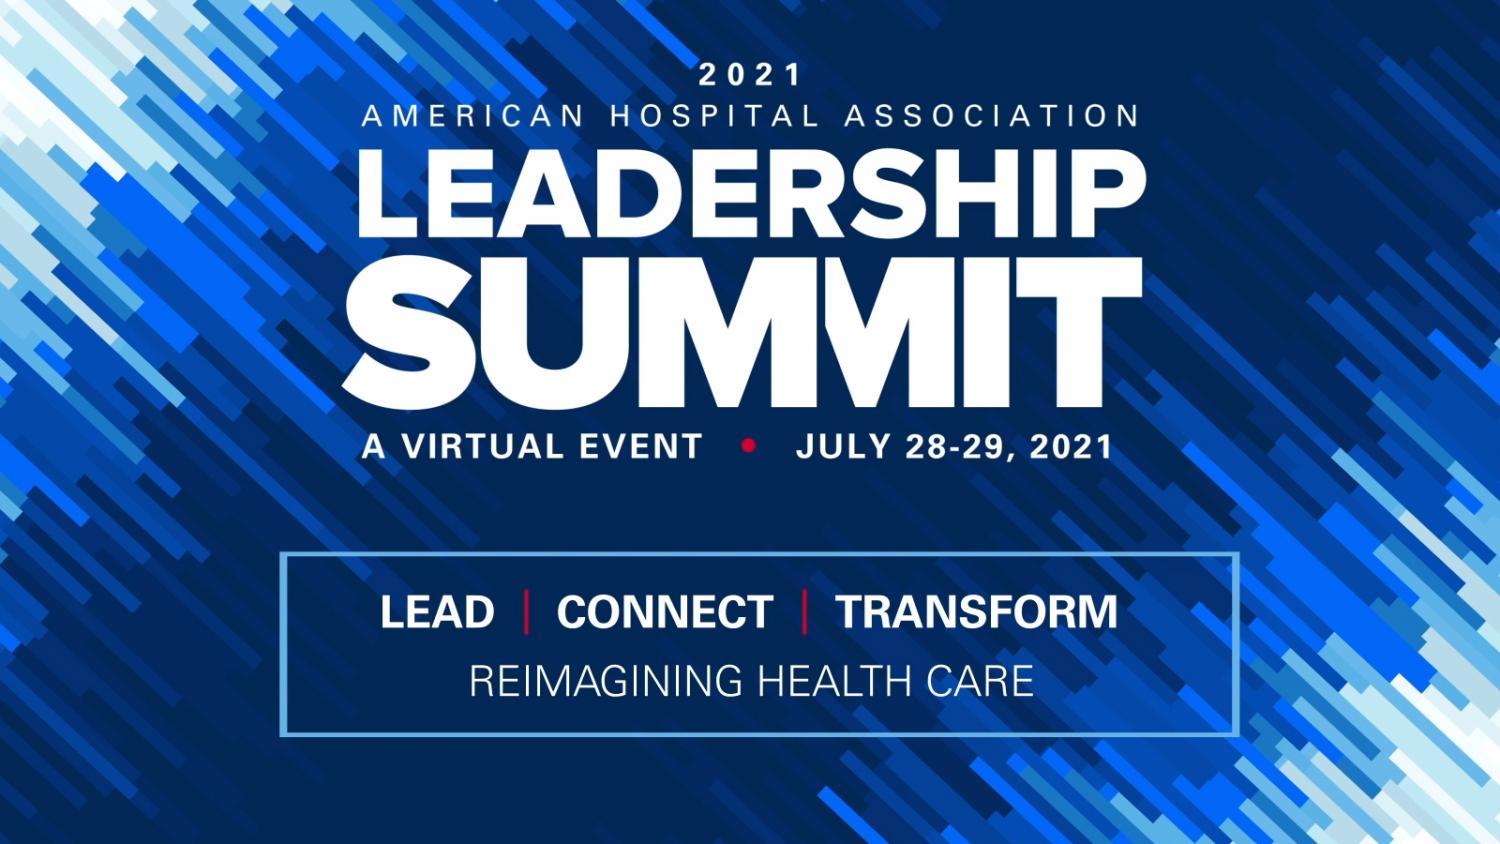 2021 AHA Leadership Summit - A Virtual Event - July 28 - 29, 2021